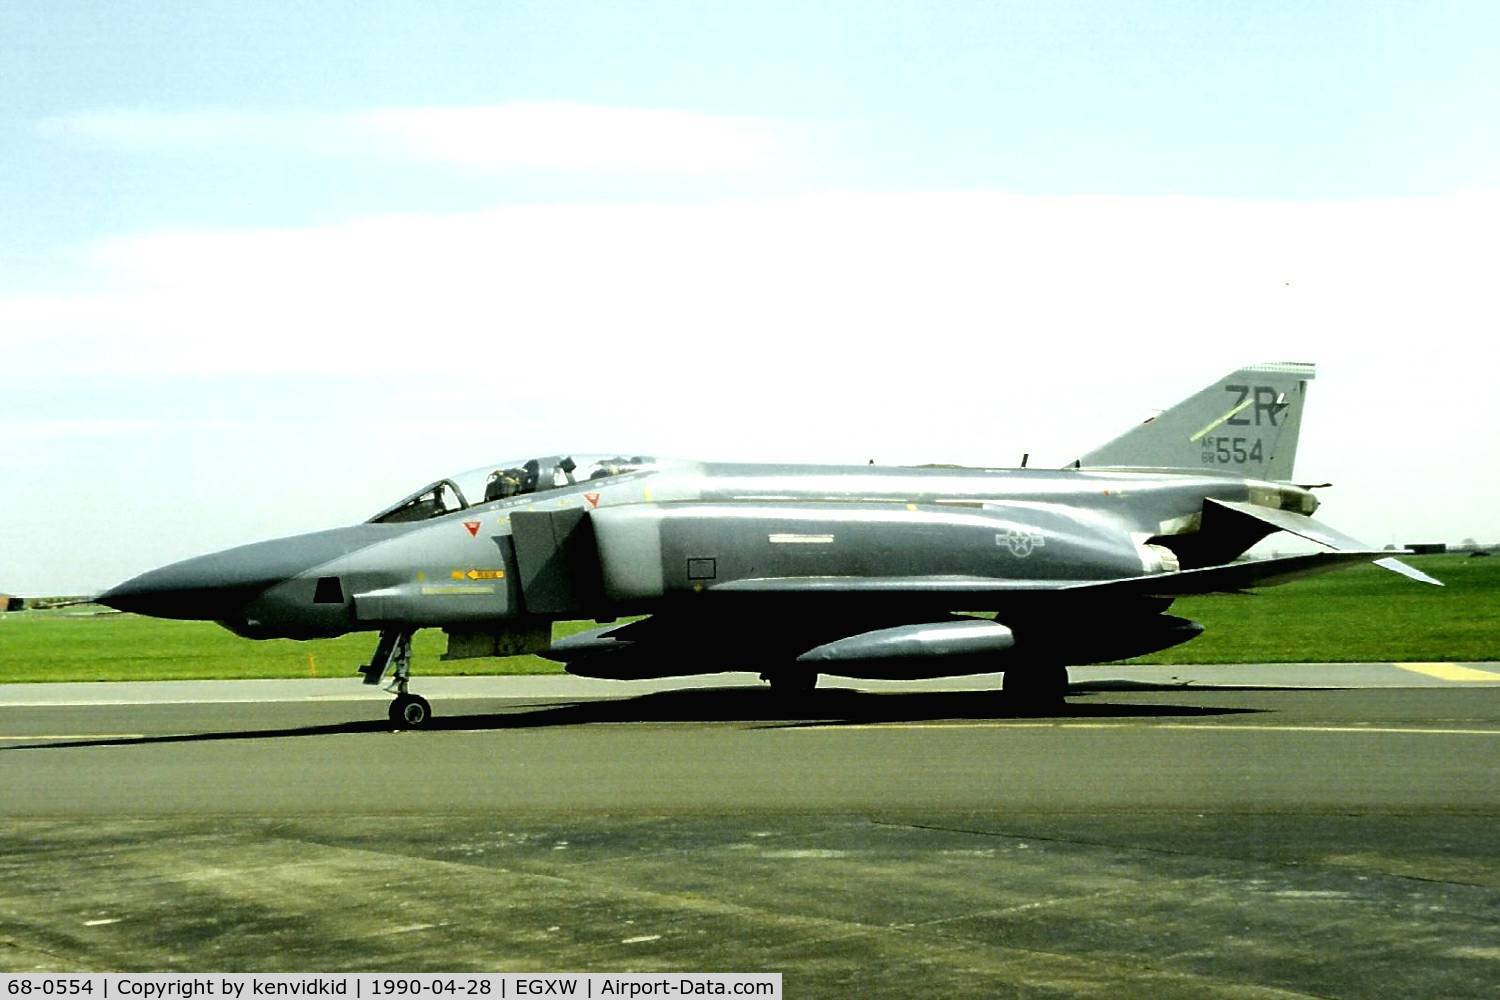 68-0554, 1968 McDonnell Douglas RF-4C Phantom II C/N 3369, At the Waddington 1990 photocall.